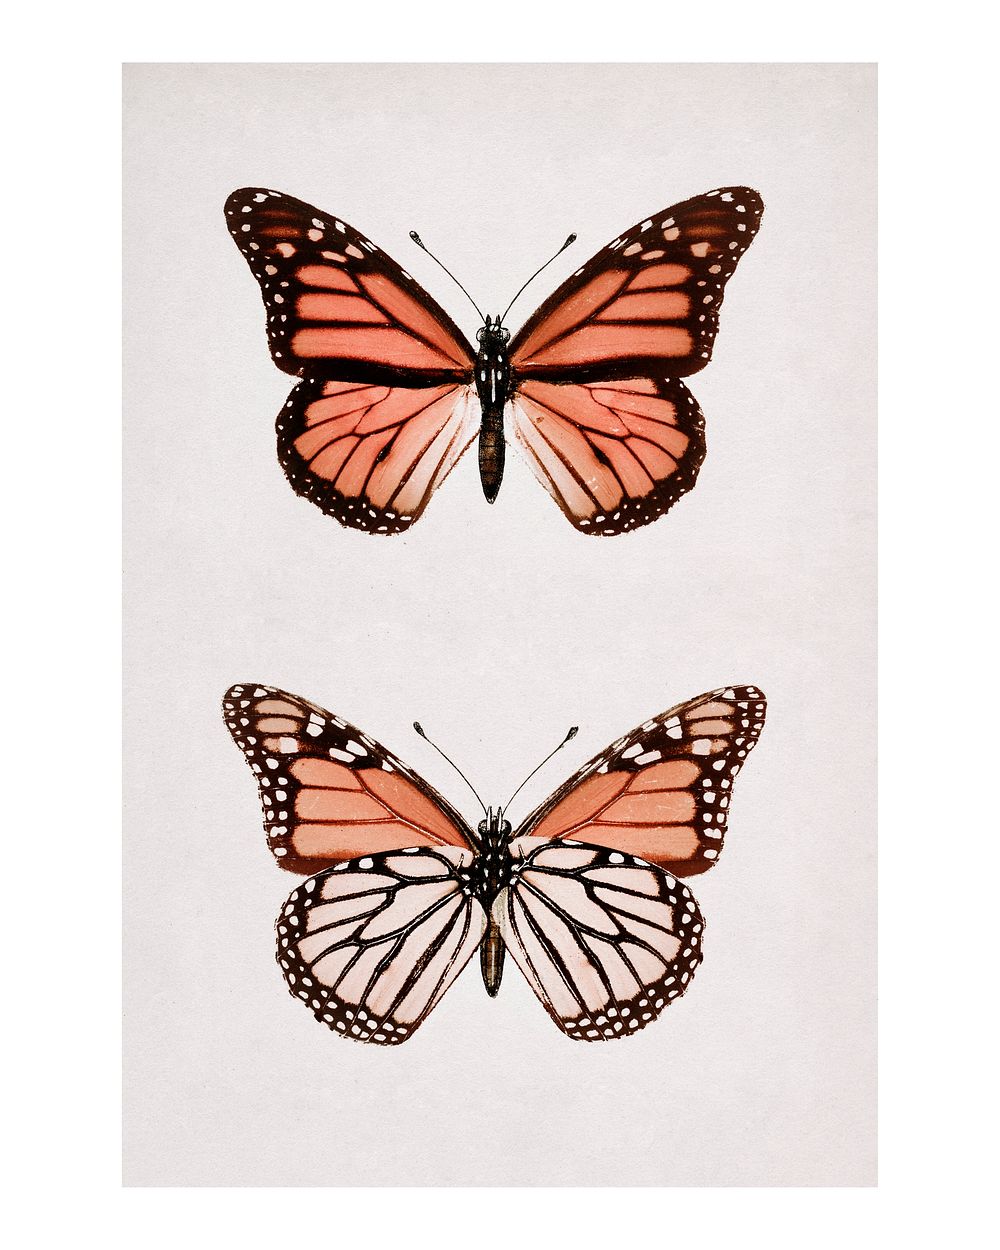 Monarch Butterfly (Danais Archippus) vintage wall art print poster design remix from original artwork by Sherman F. Denton.